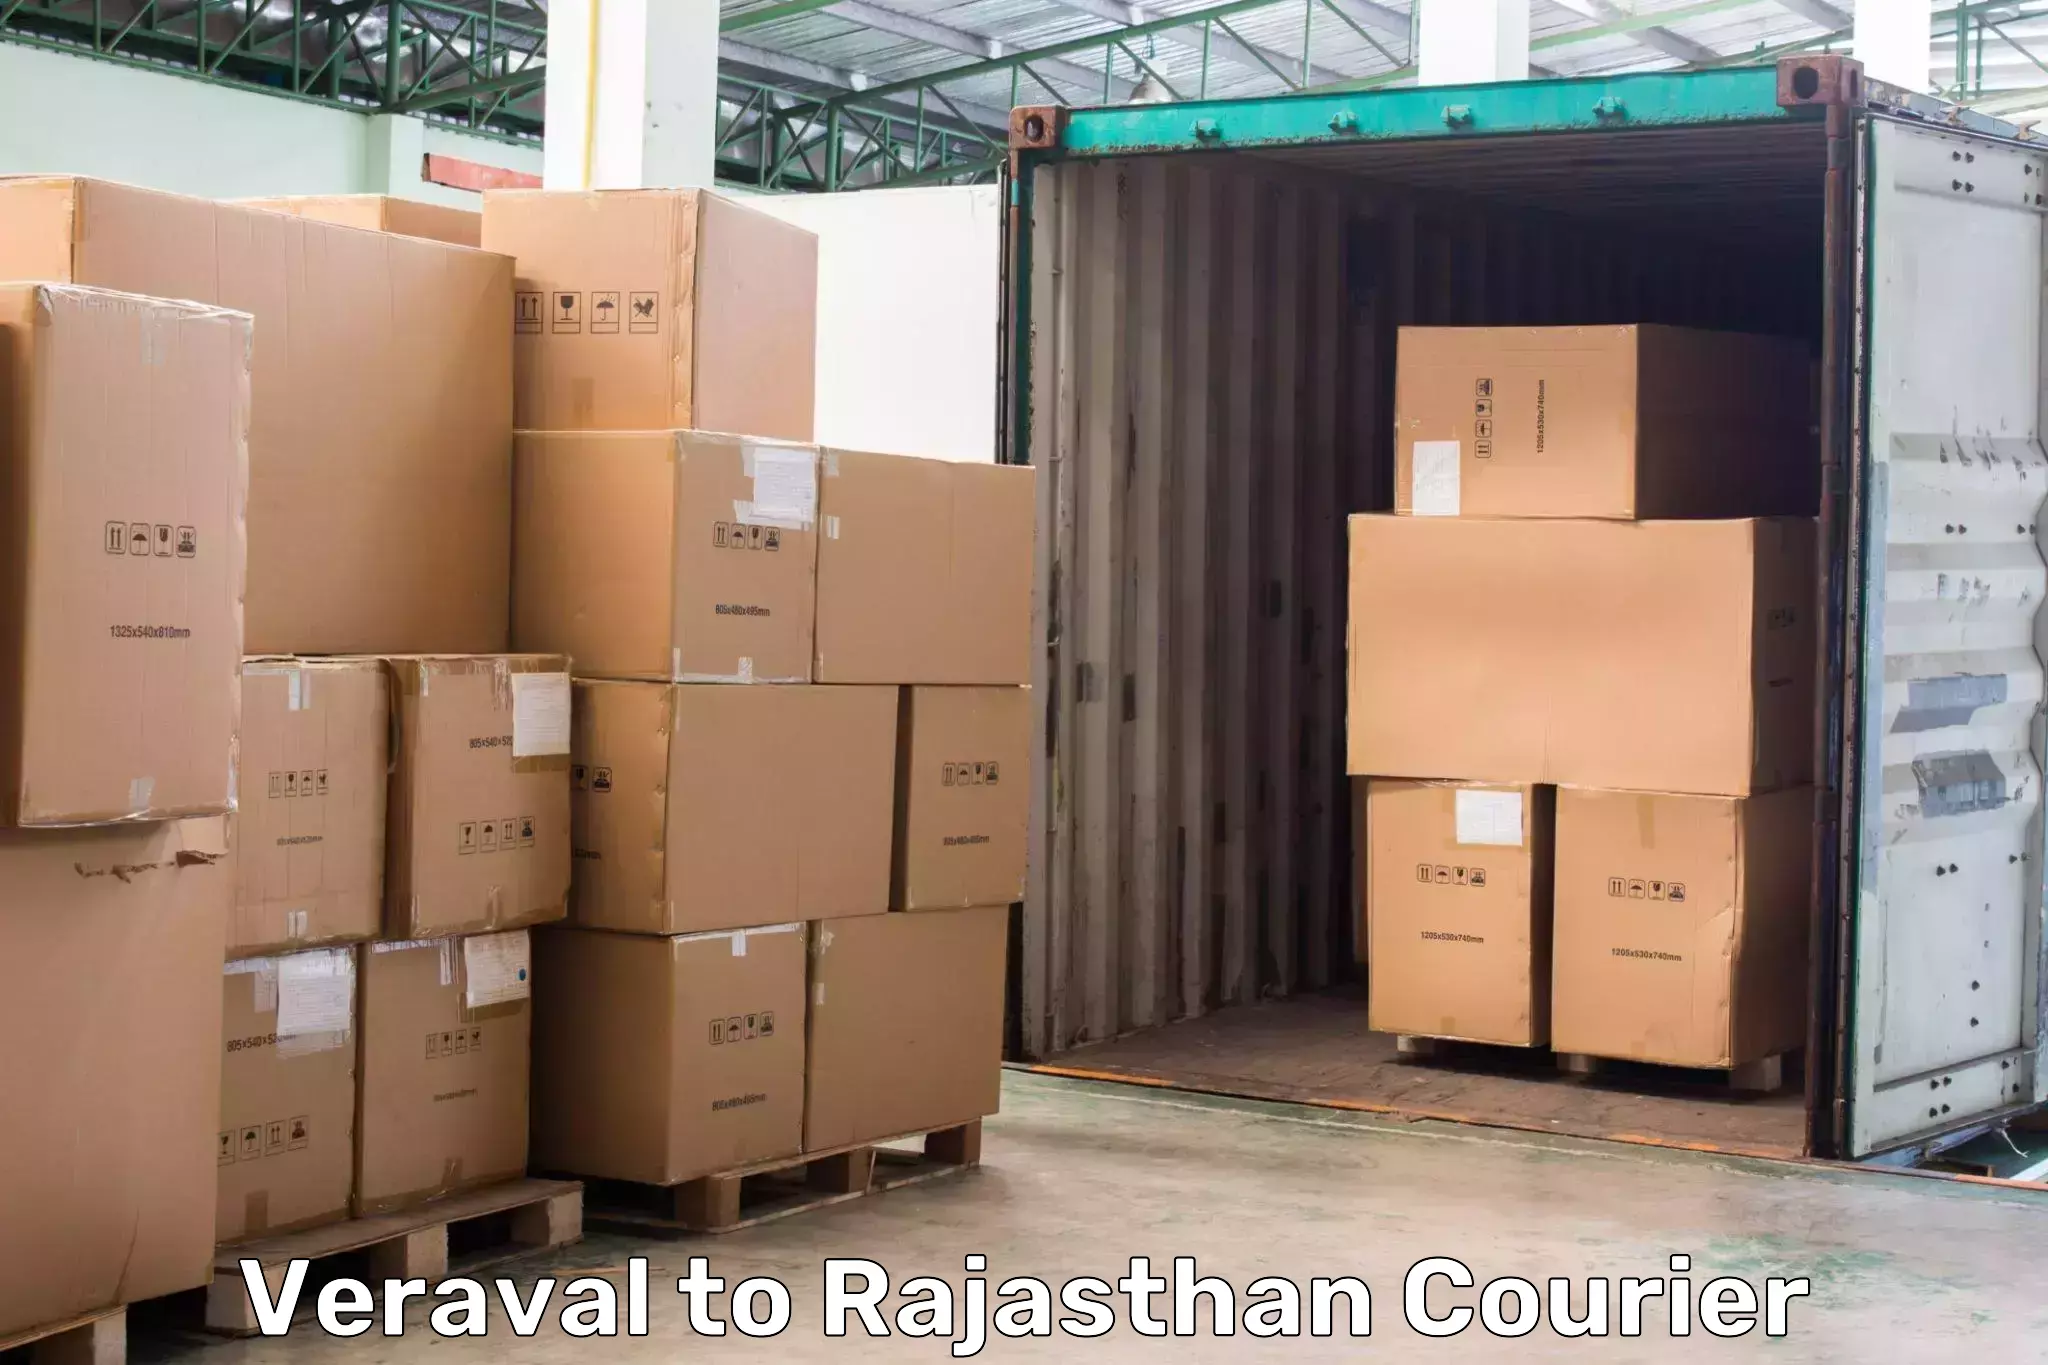 Advanced shipping network Veraval to Nagar